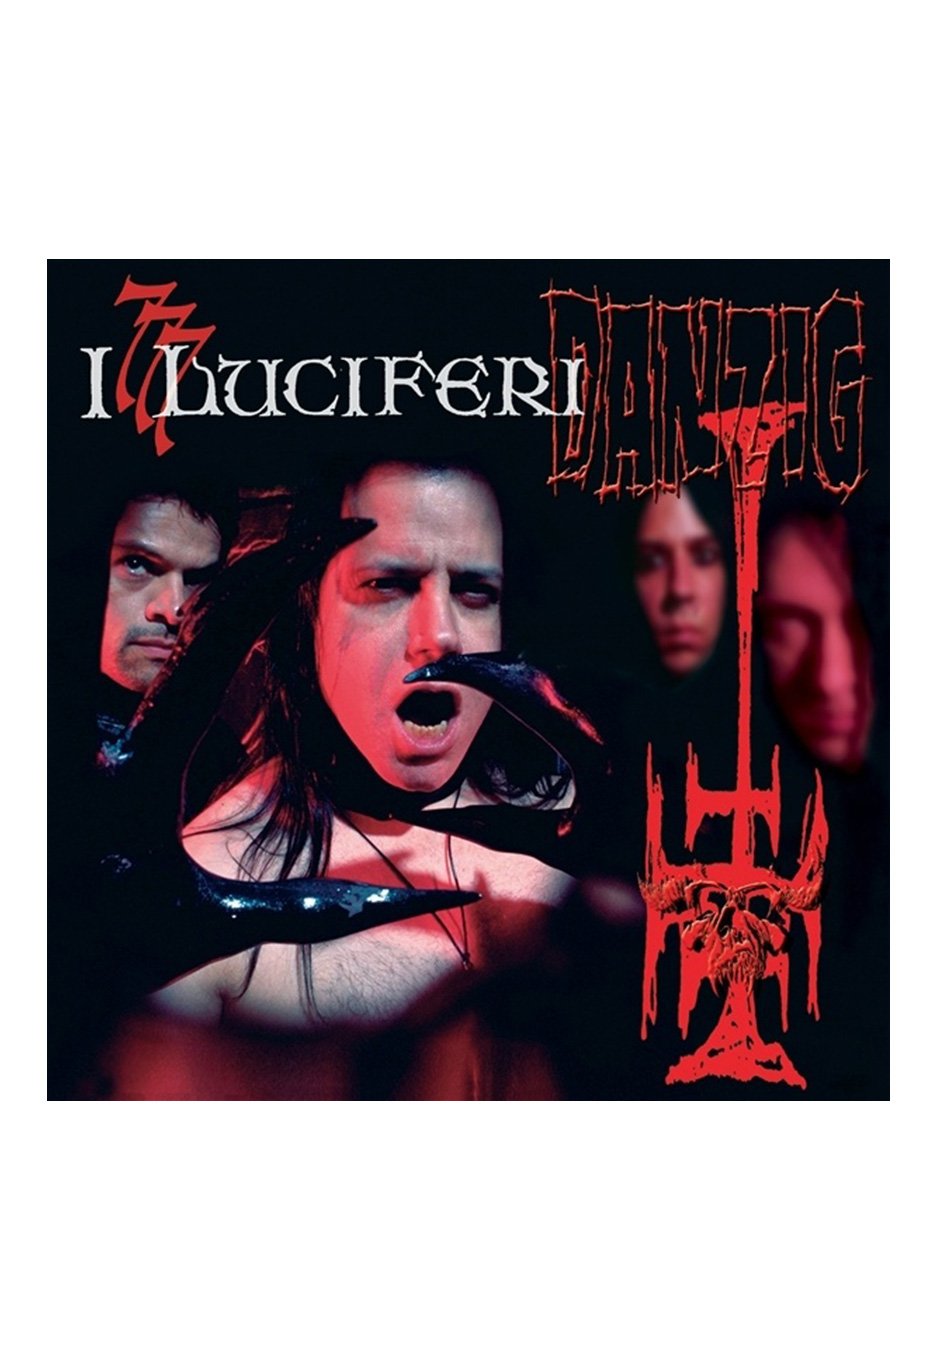 Danzig - 777: I Luciferi - Vinyl